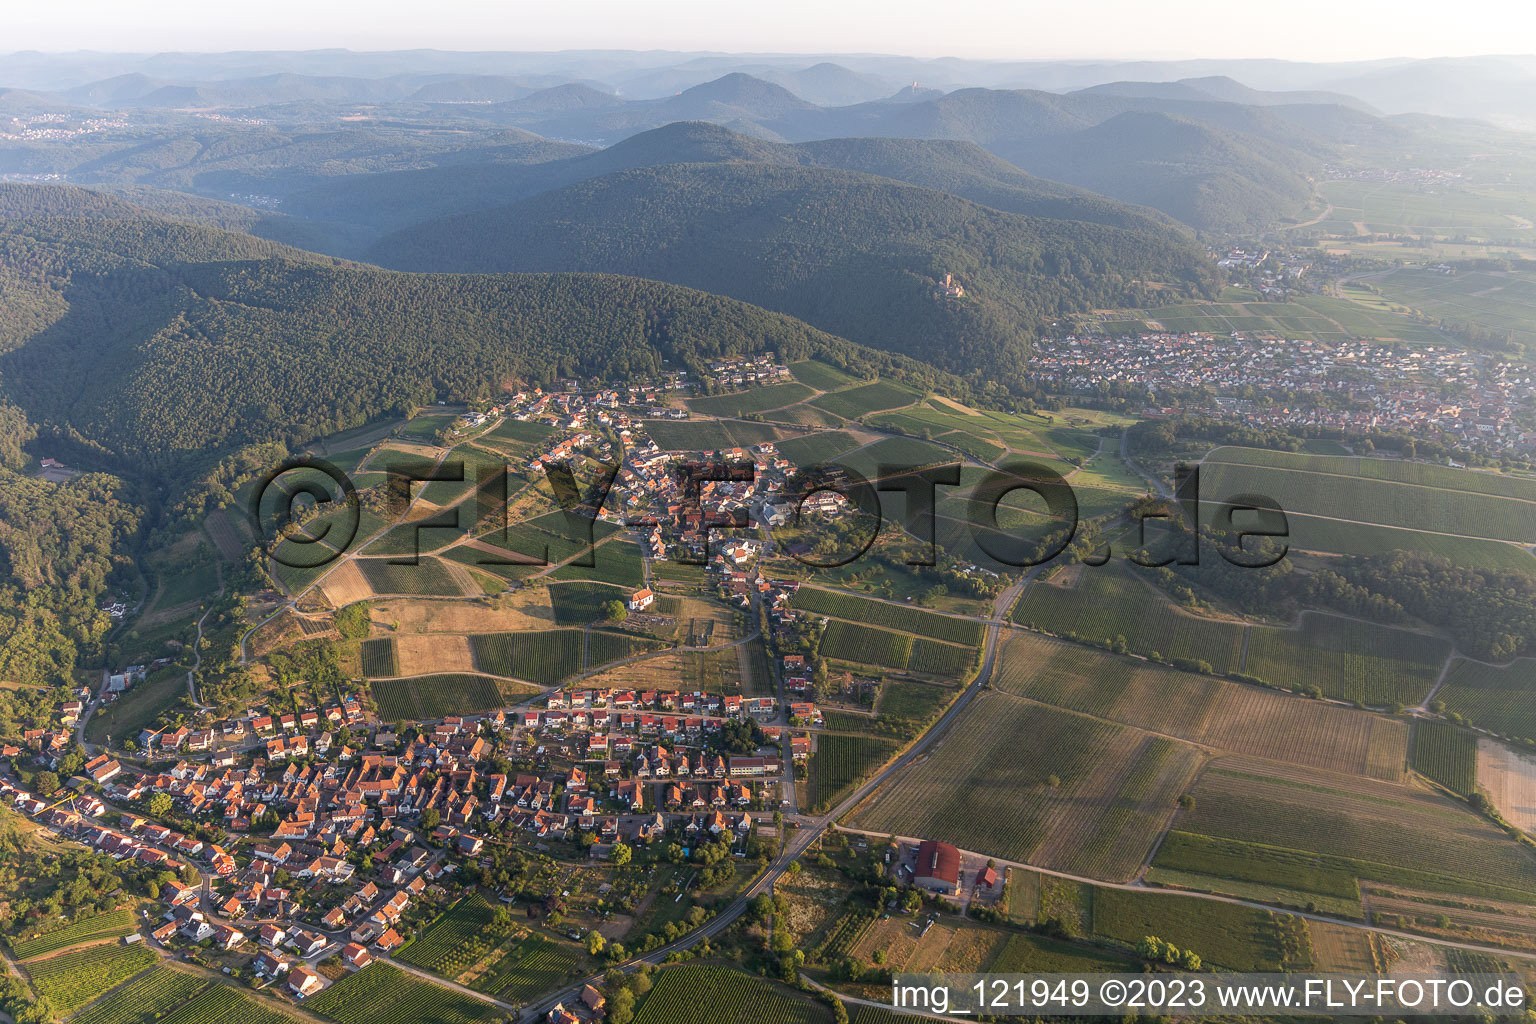 District Gleiszellen in Gleiszellen-Gleishorbach in the state Rhineland-Palatinate, Germany viewn from the air